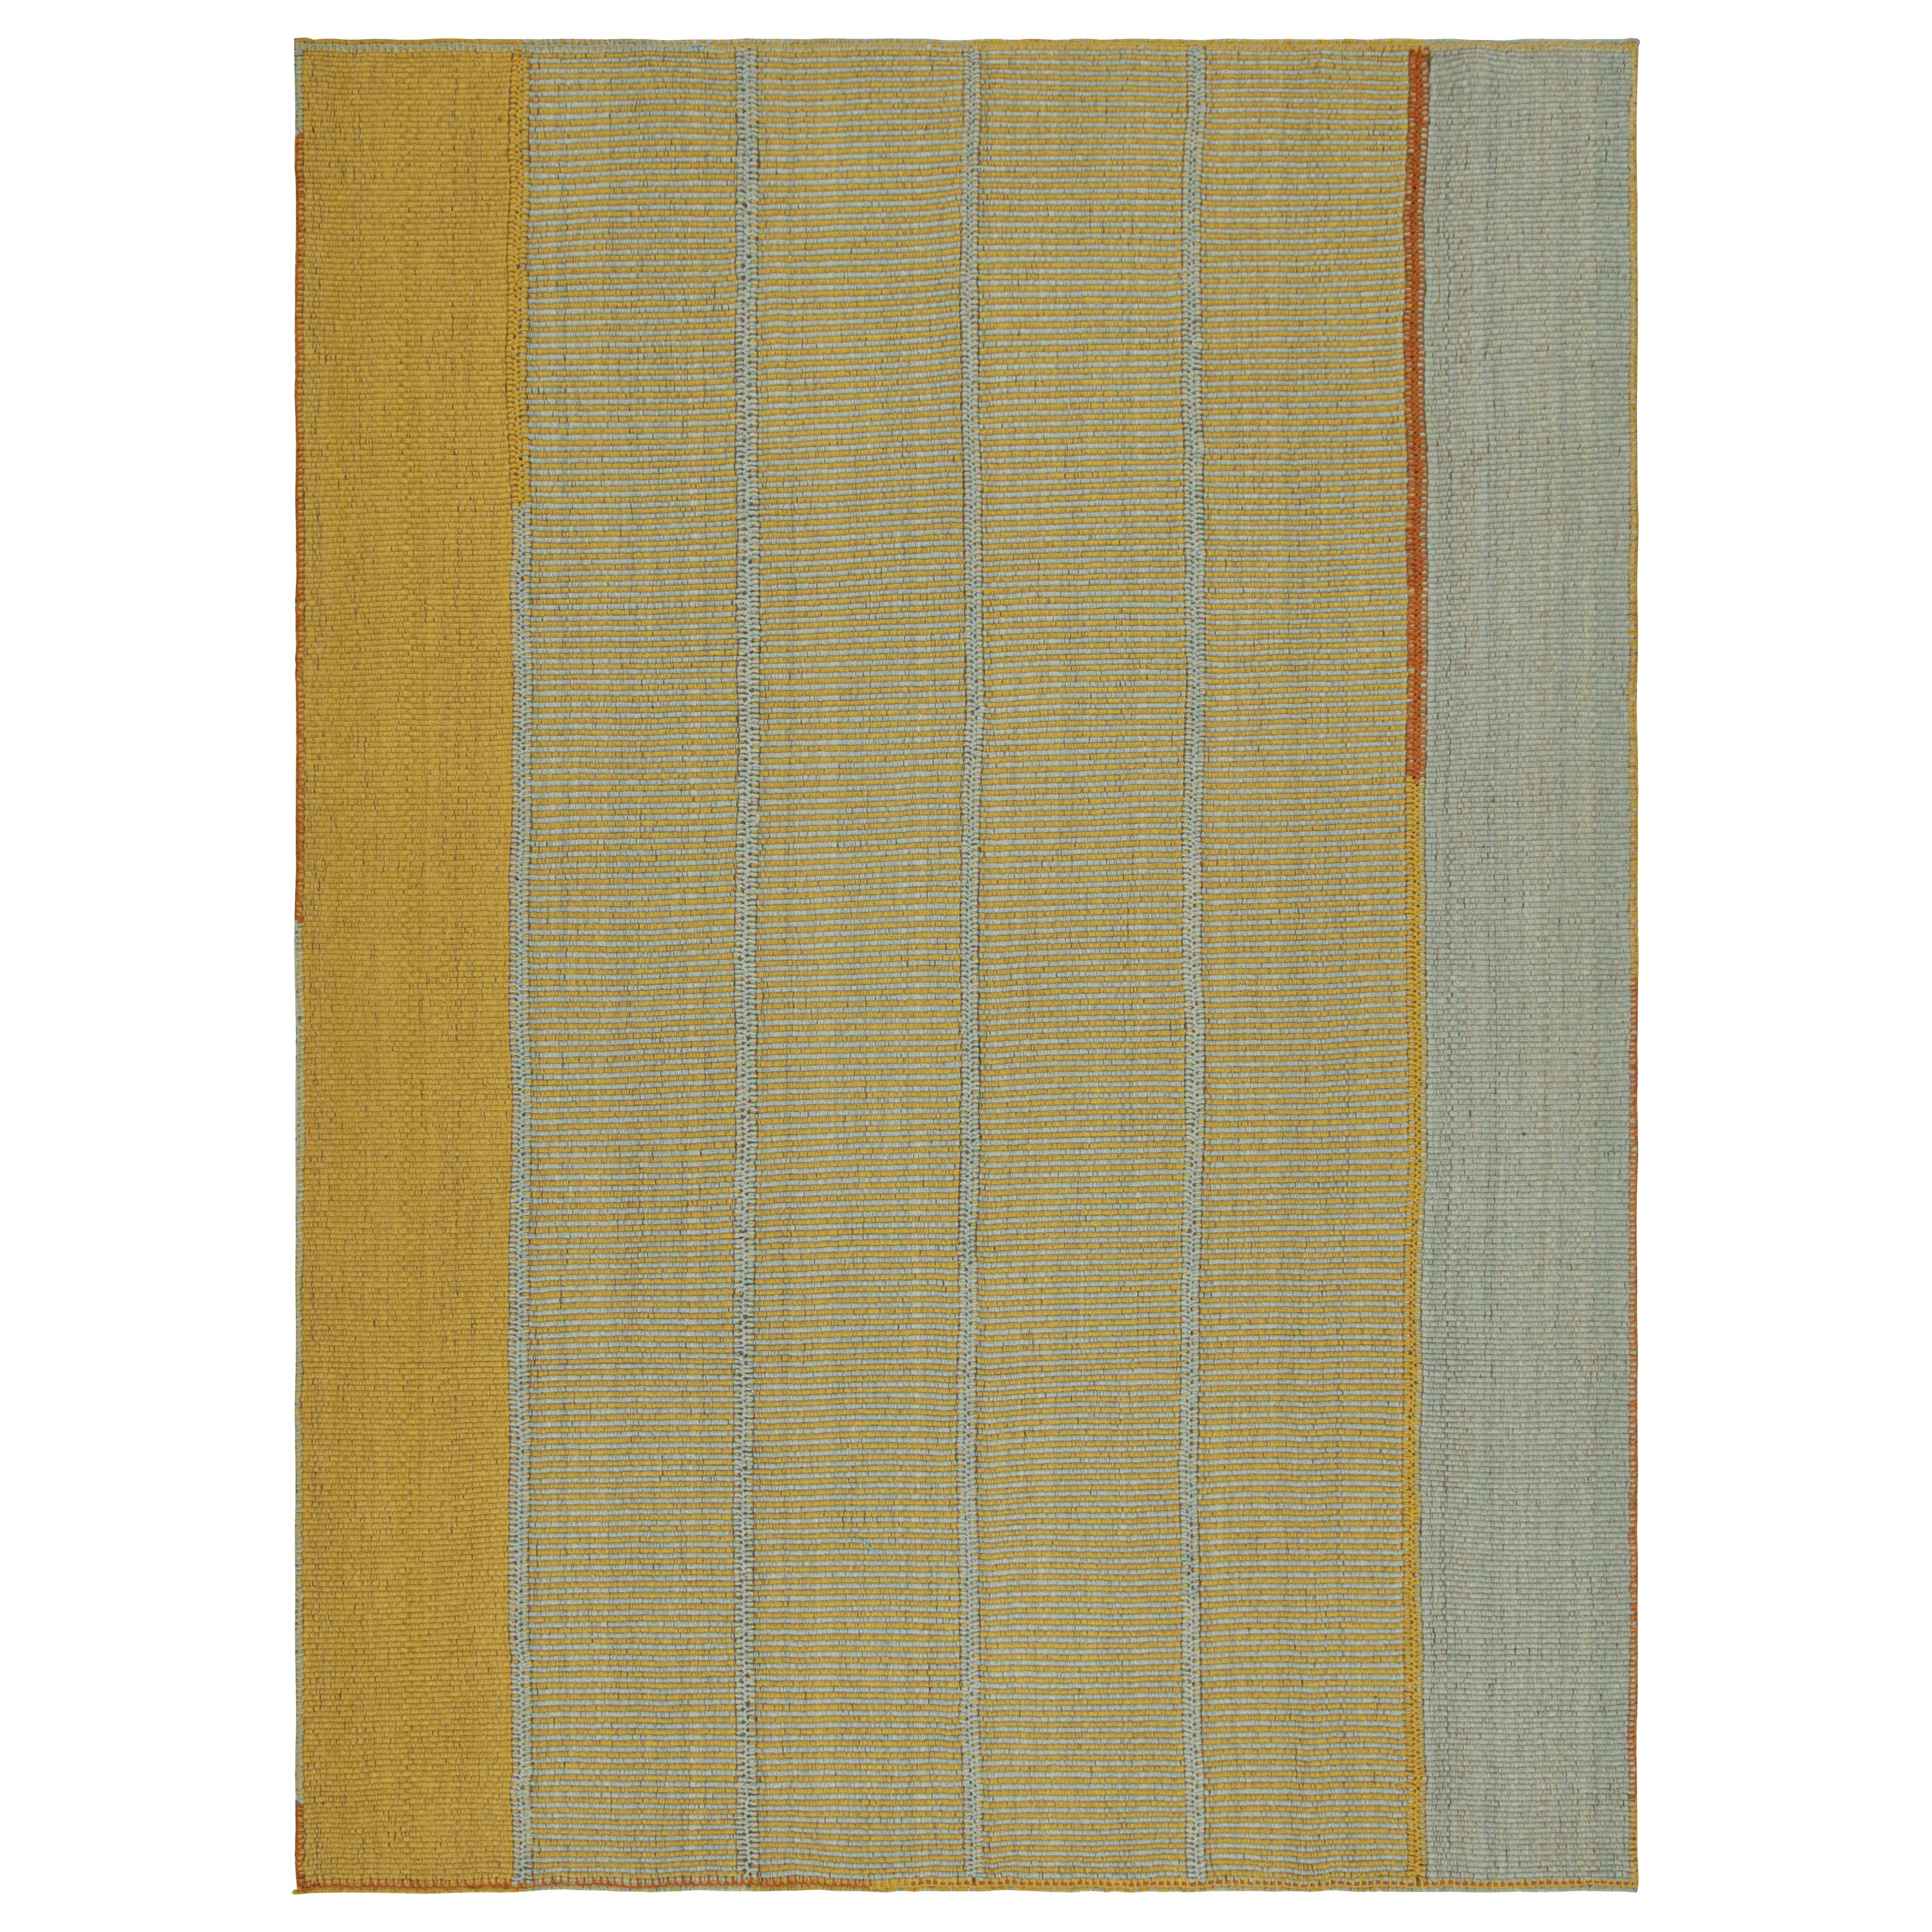 Rug & Kilim's Contemporary Kilim in Gold and Light Blue Stripes (Kilim contemporain à rayures or et bleu clair)